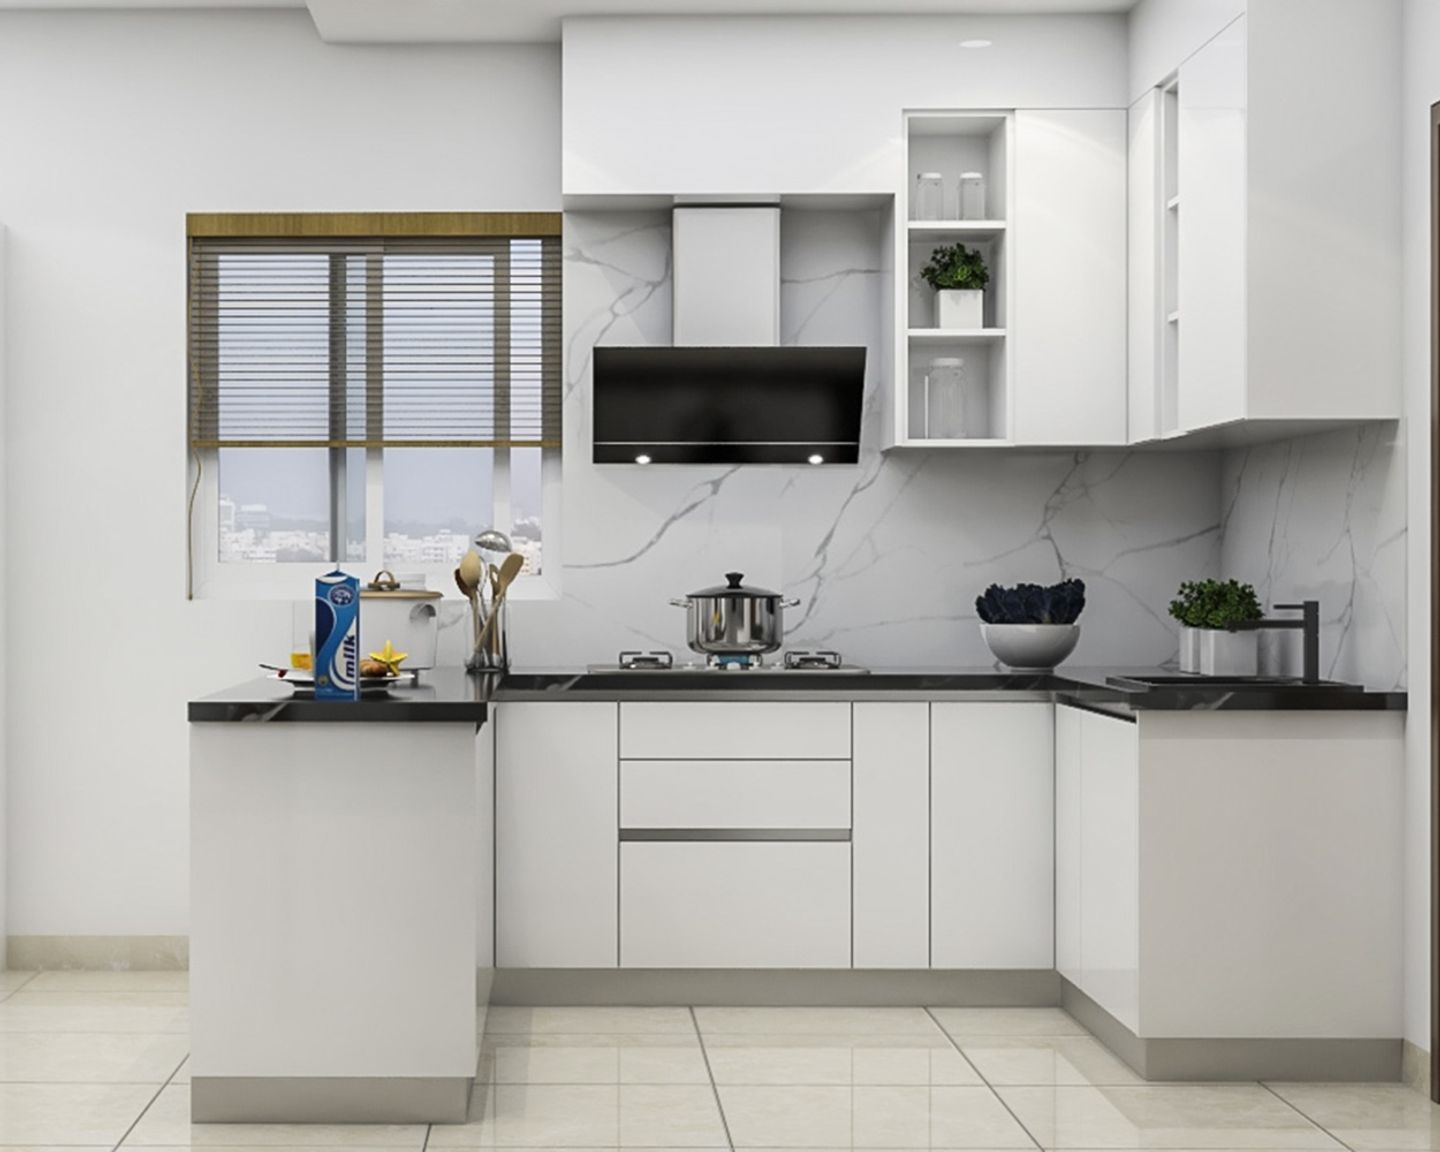 10X10 Ft U-Shaped Kitchen Design With Open Shelves - Livspace